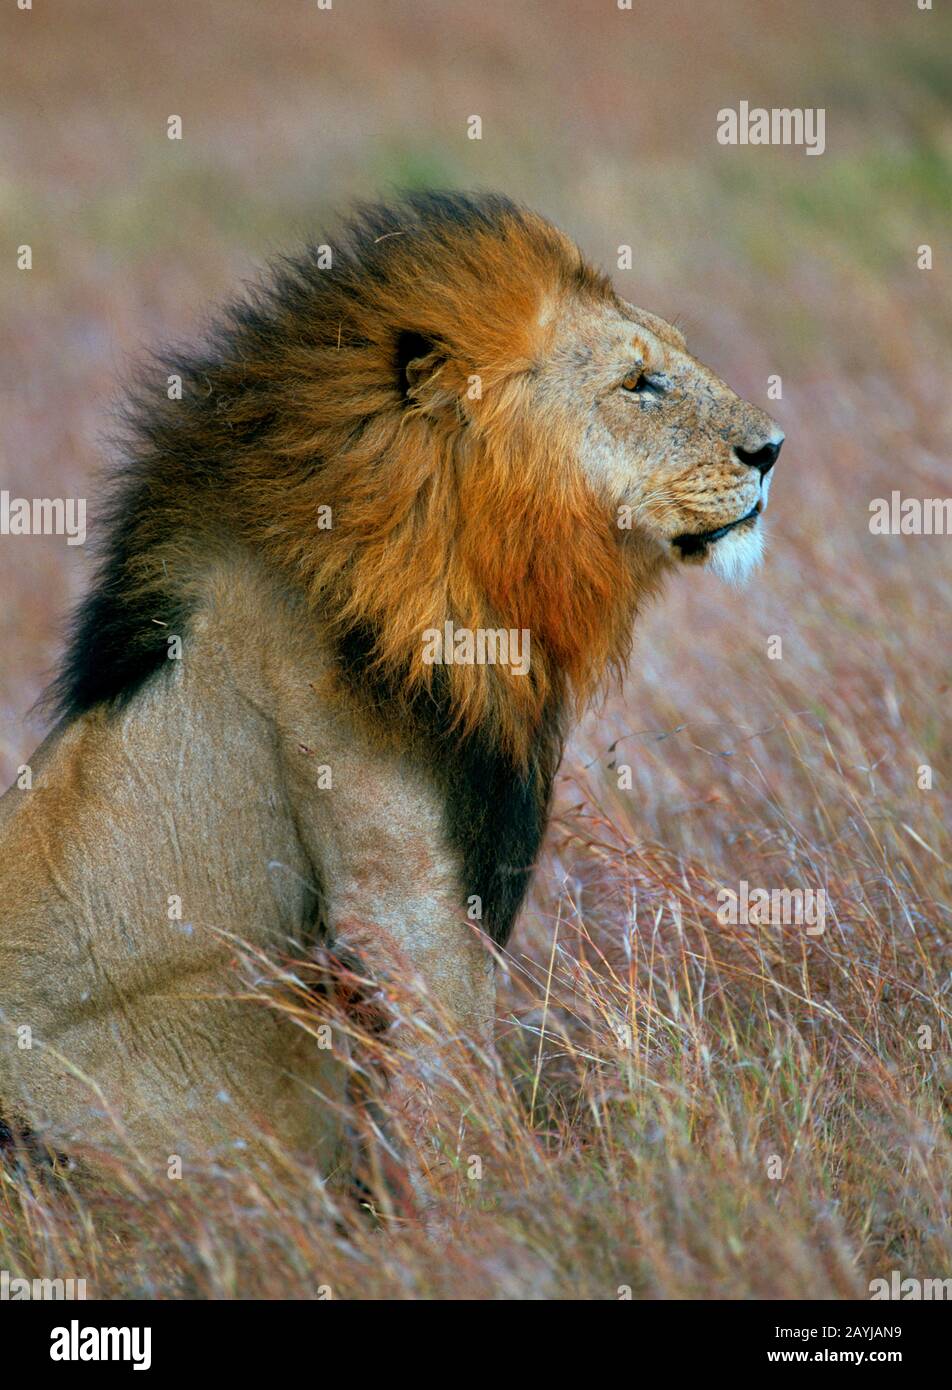 Leone (Panthera leo), leone maschio seduto maestà su erba secca, vista laterale, Africa Foto Stock